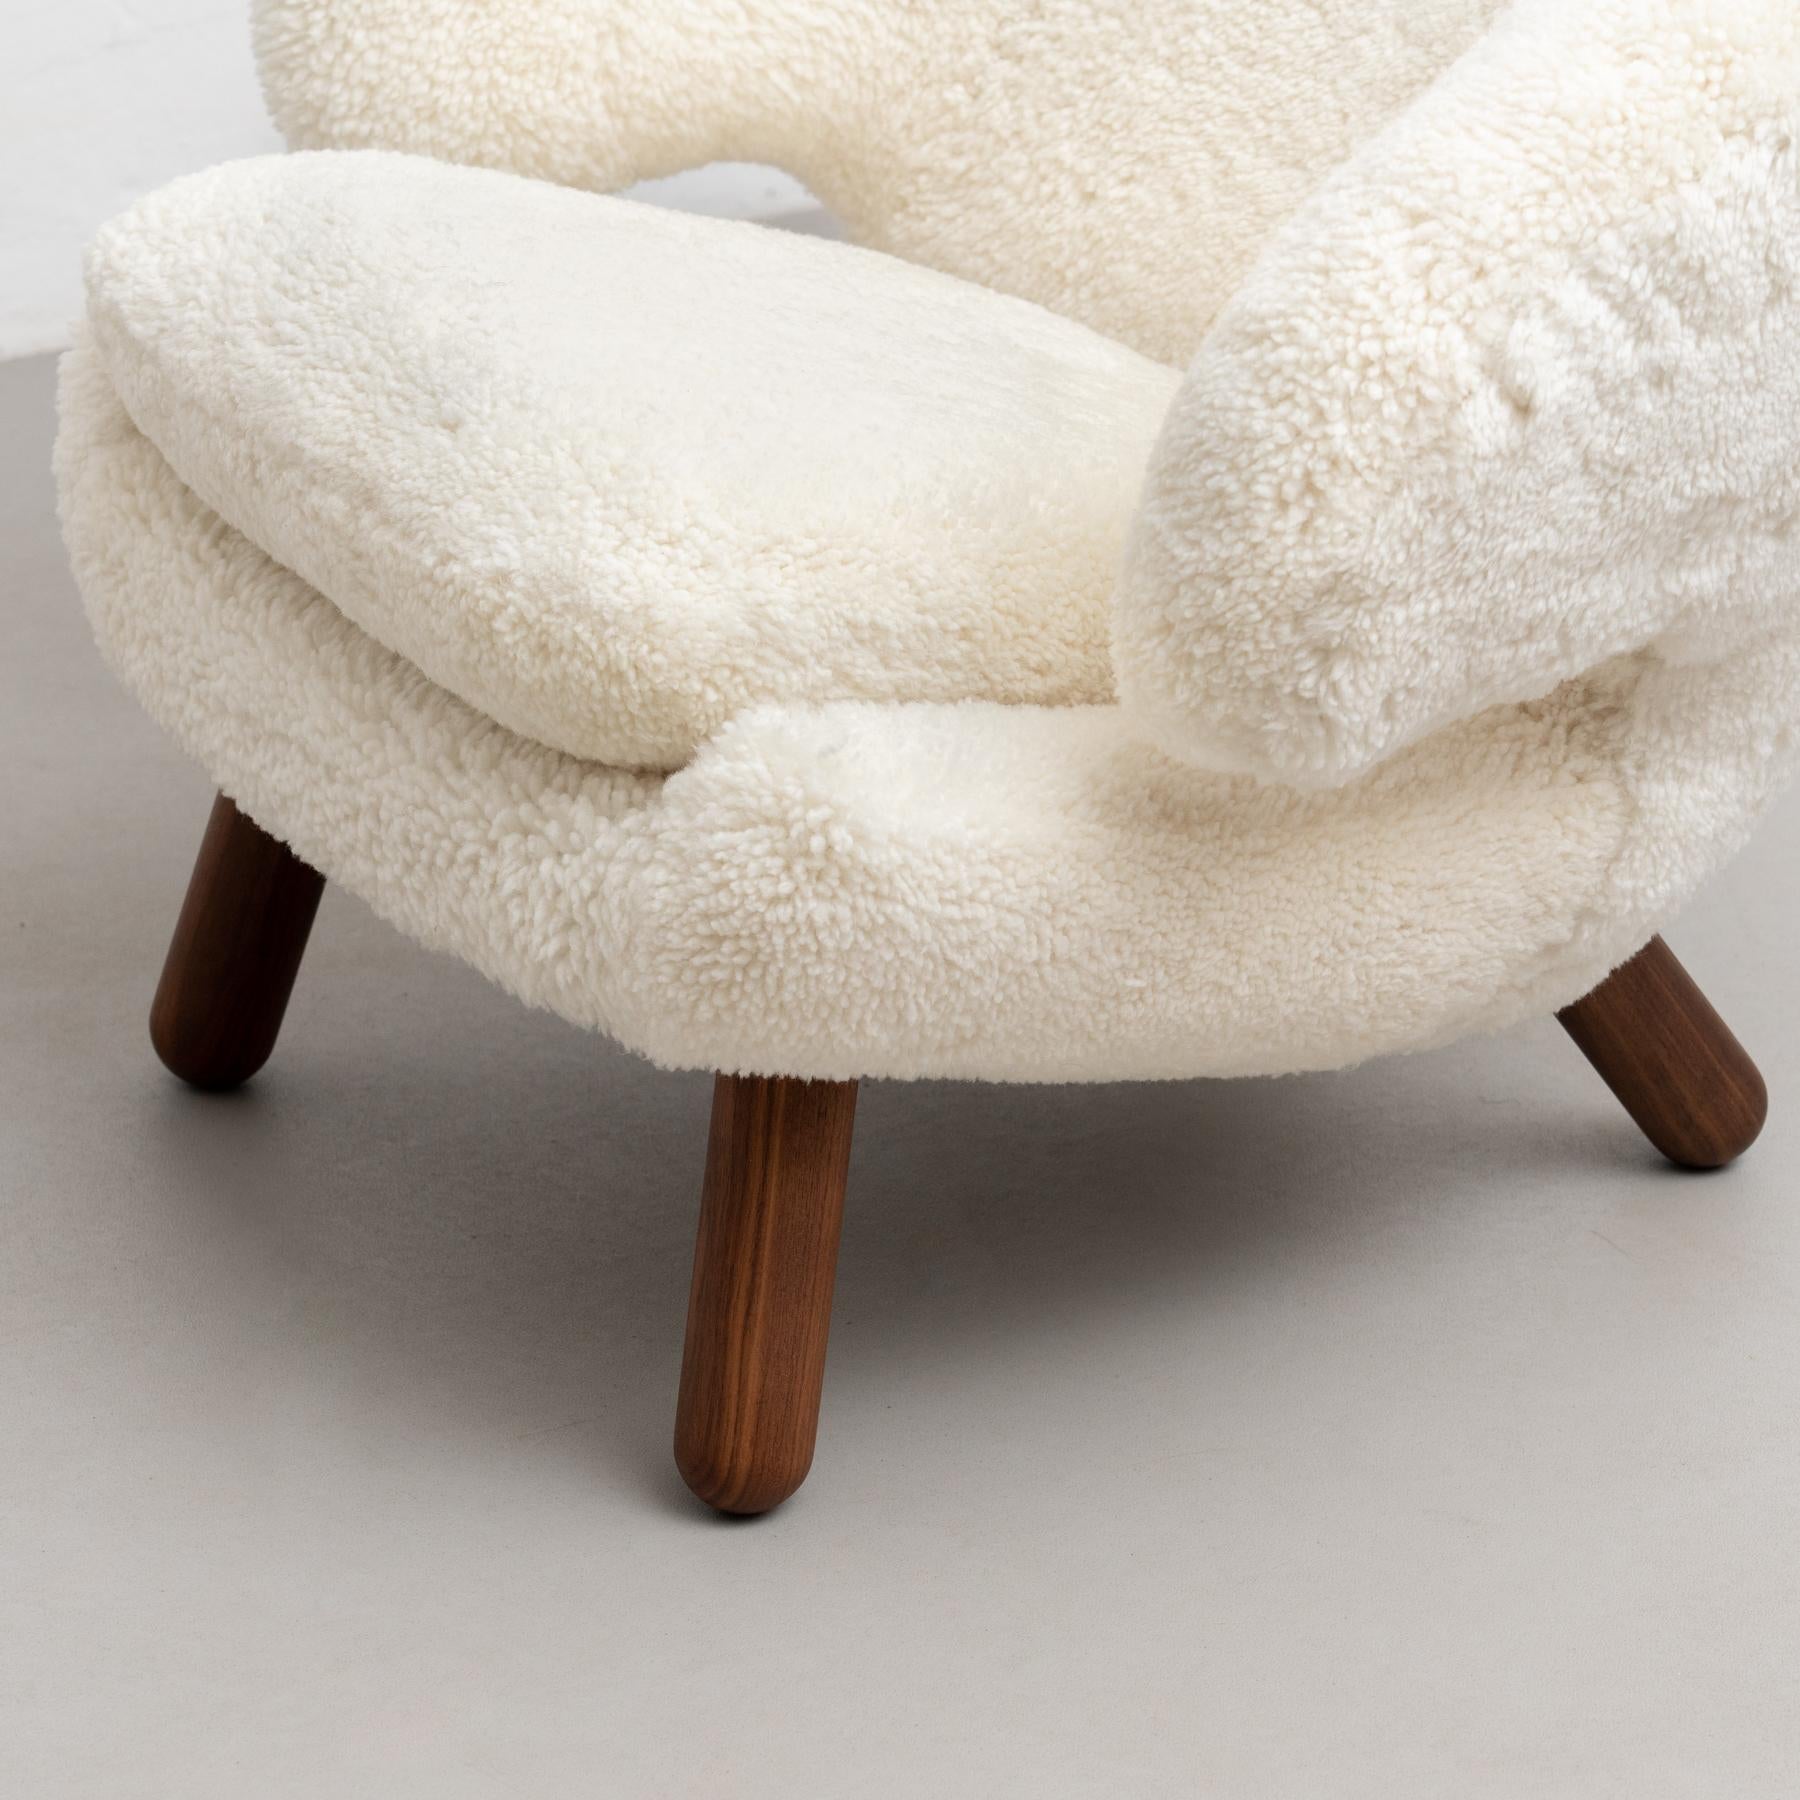 Finn Juhl Pelican Chair Upholstered in Offwhite Sheepskin (Chaise Pélican recouverte de peau de mouton blanc cassé) en vente 6